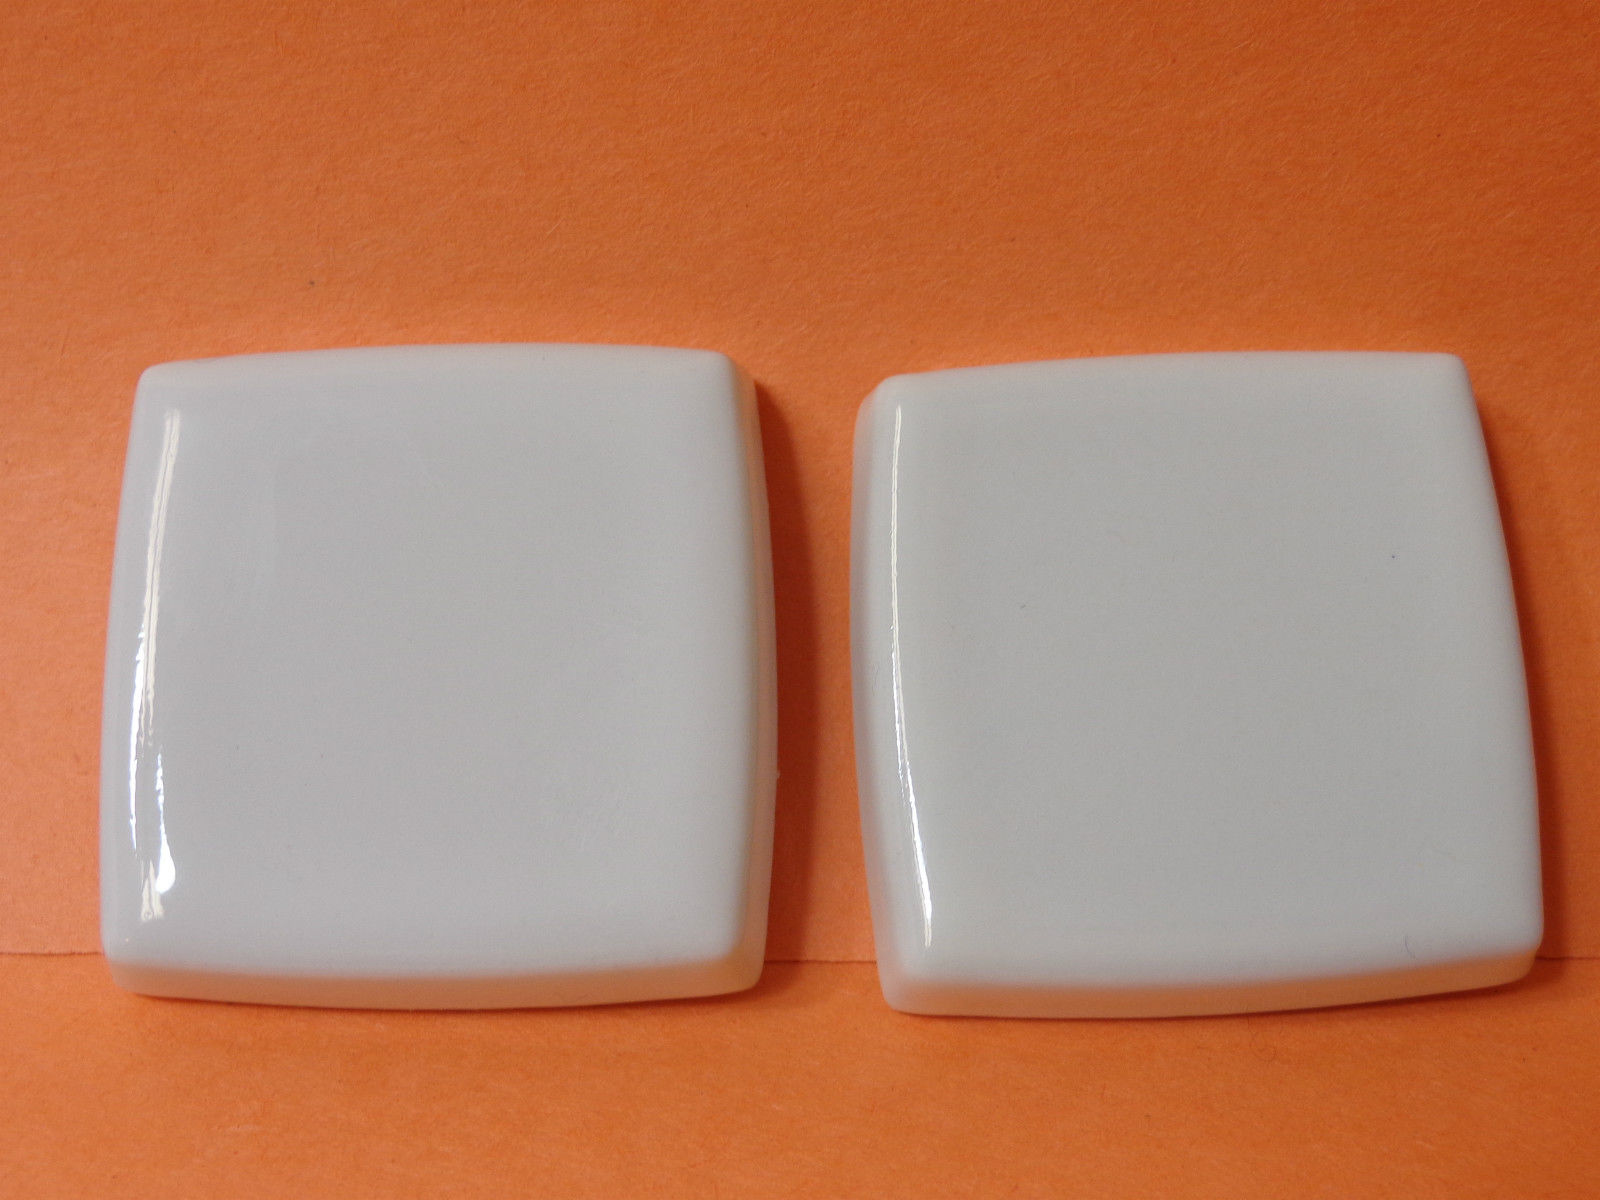 Kohler | 9926-95 | KL9926-95 (22493-95) Kohler Alterna Large 2-1/2" Square Ceramic Inserts - ICE GREY